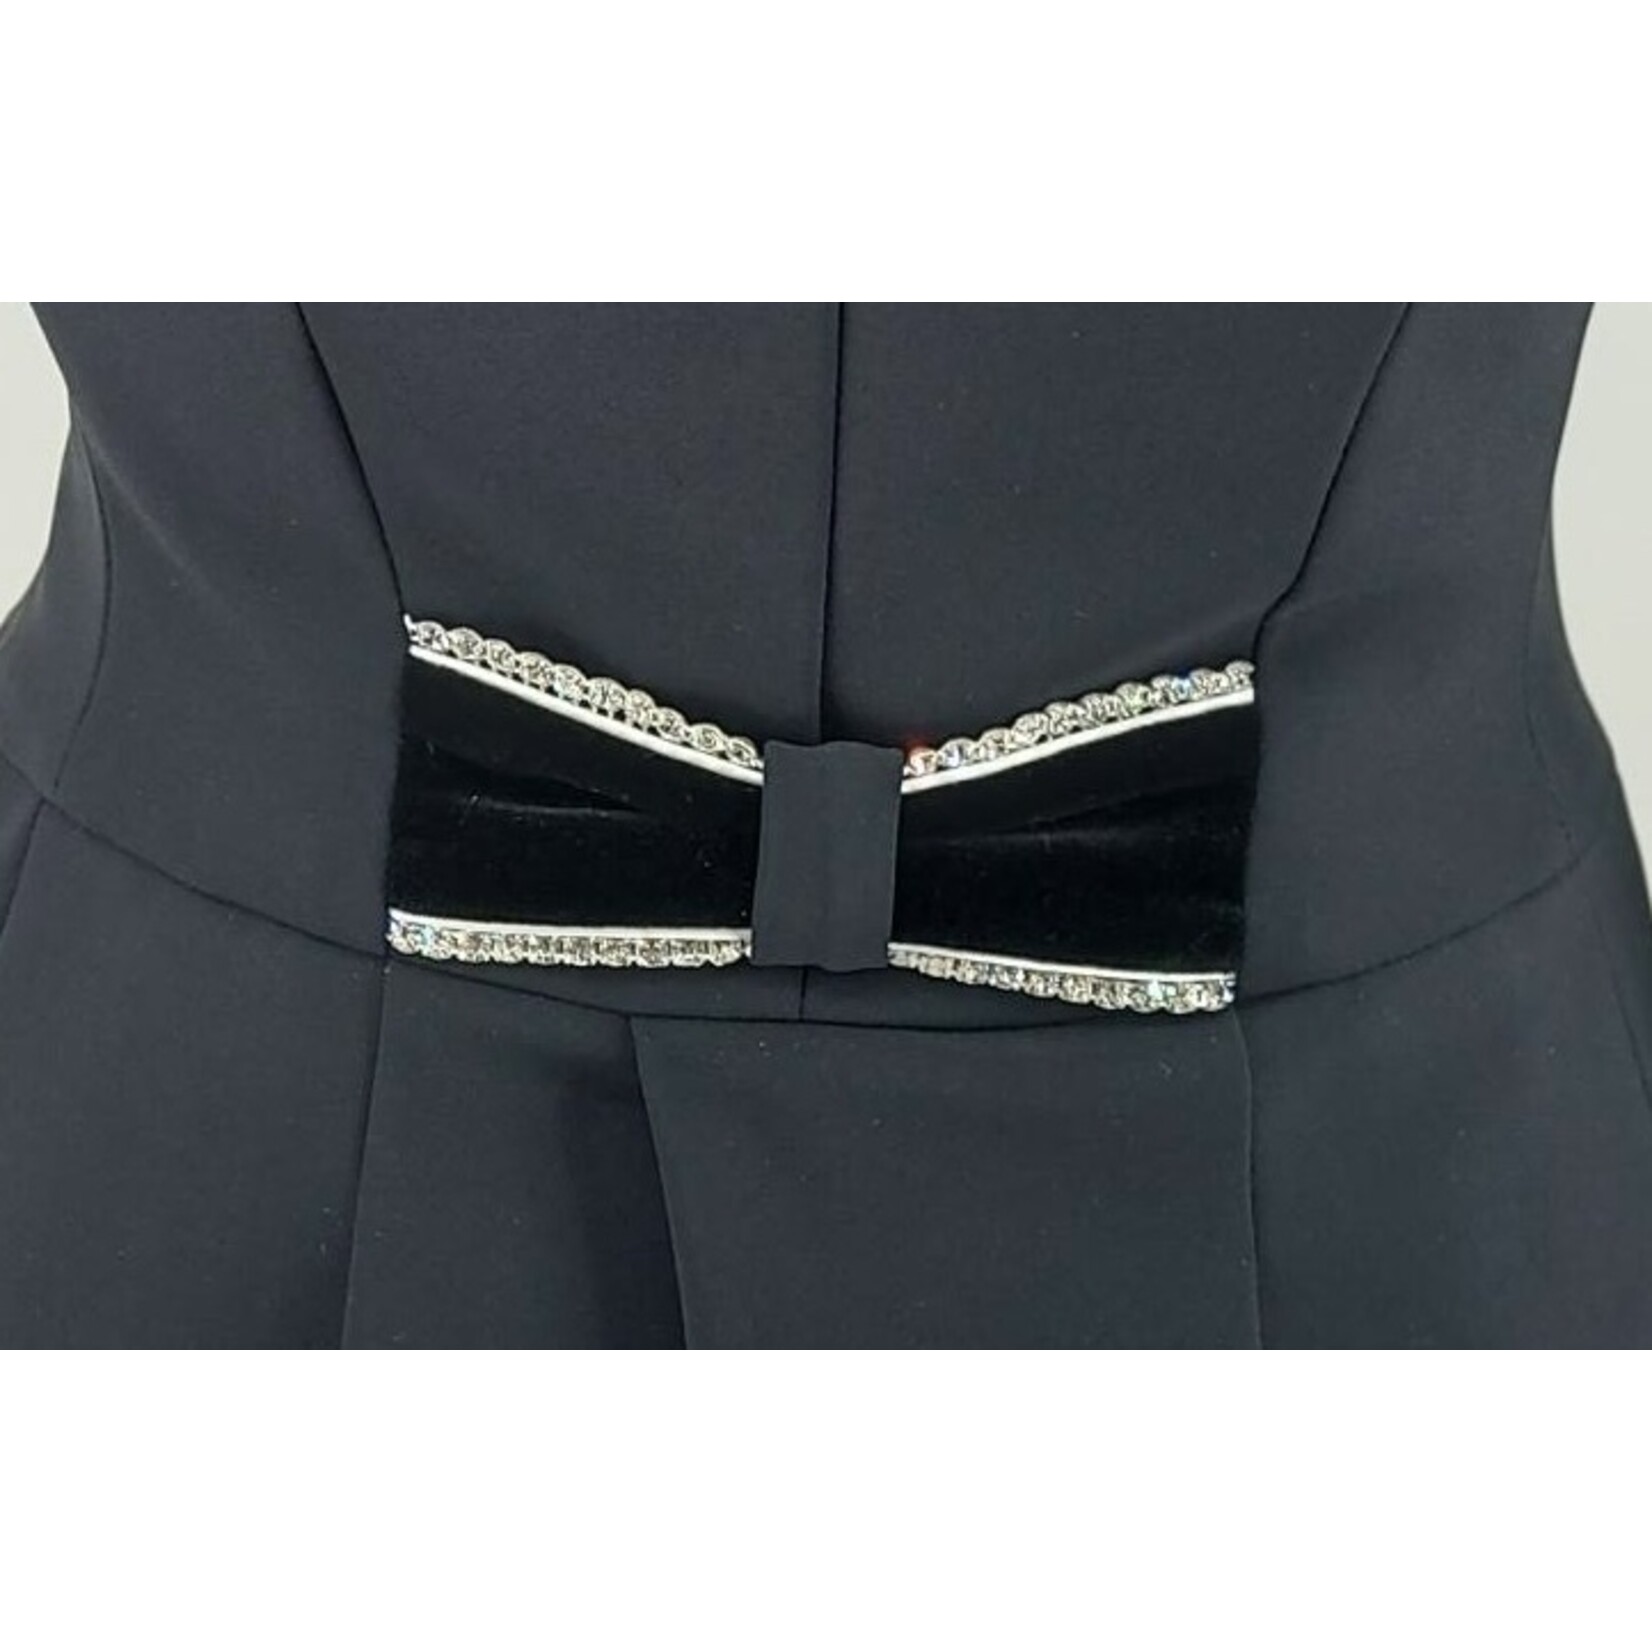 Lamantia Couture Nederland DEMO Lamantia Couture short tailcoat black-white velvet   ( size 32 and 40)